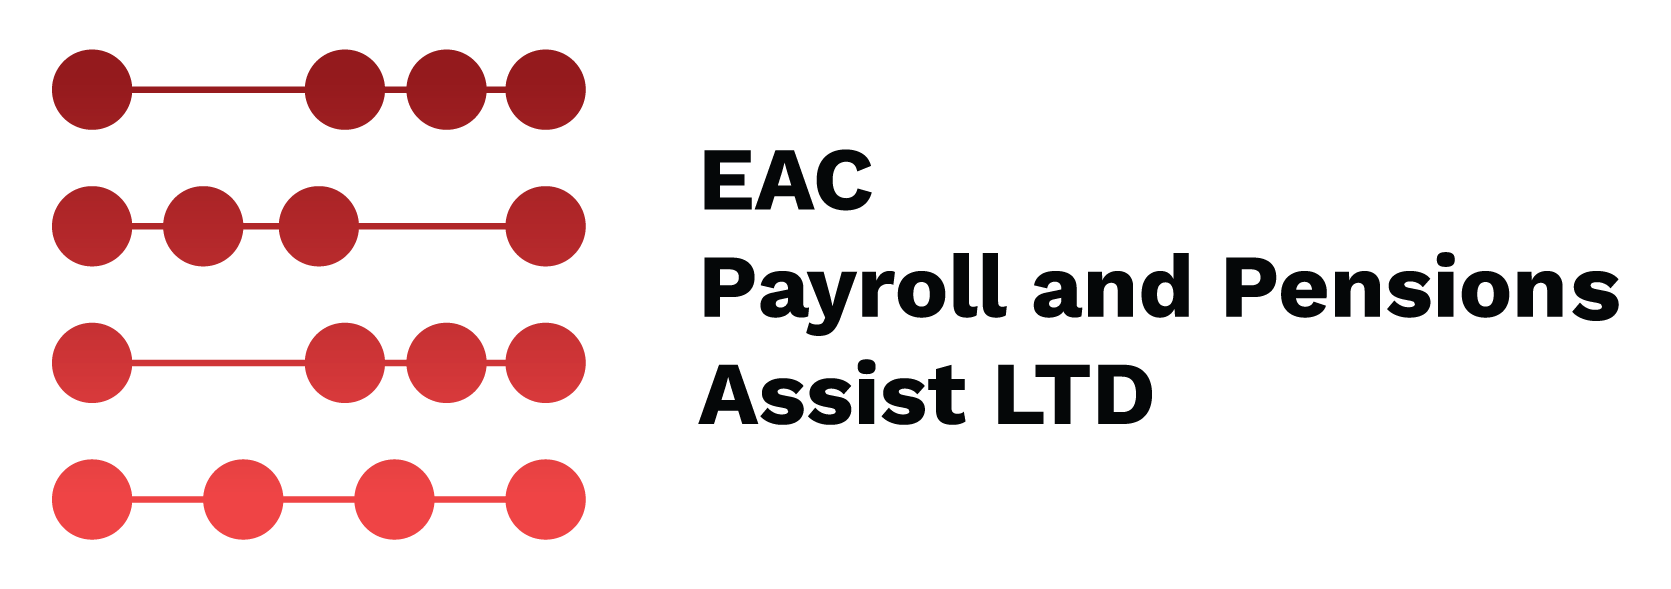 EAC Payroll & Pensions Assists LTD logo